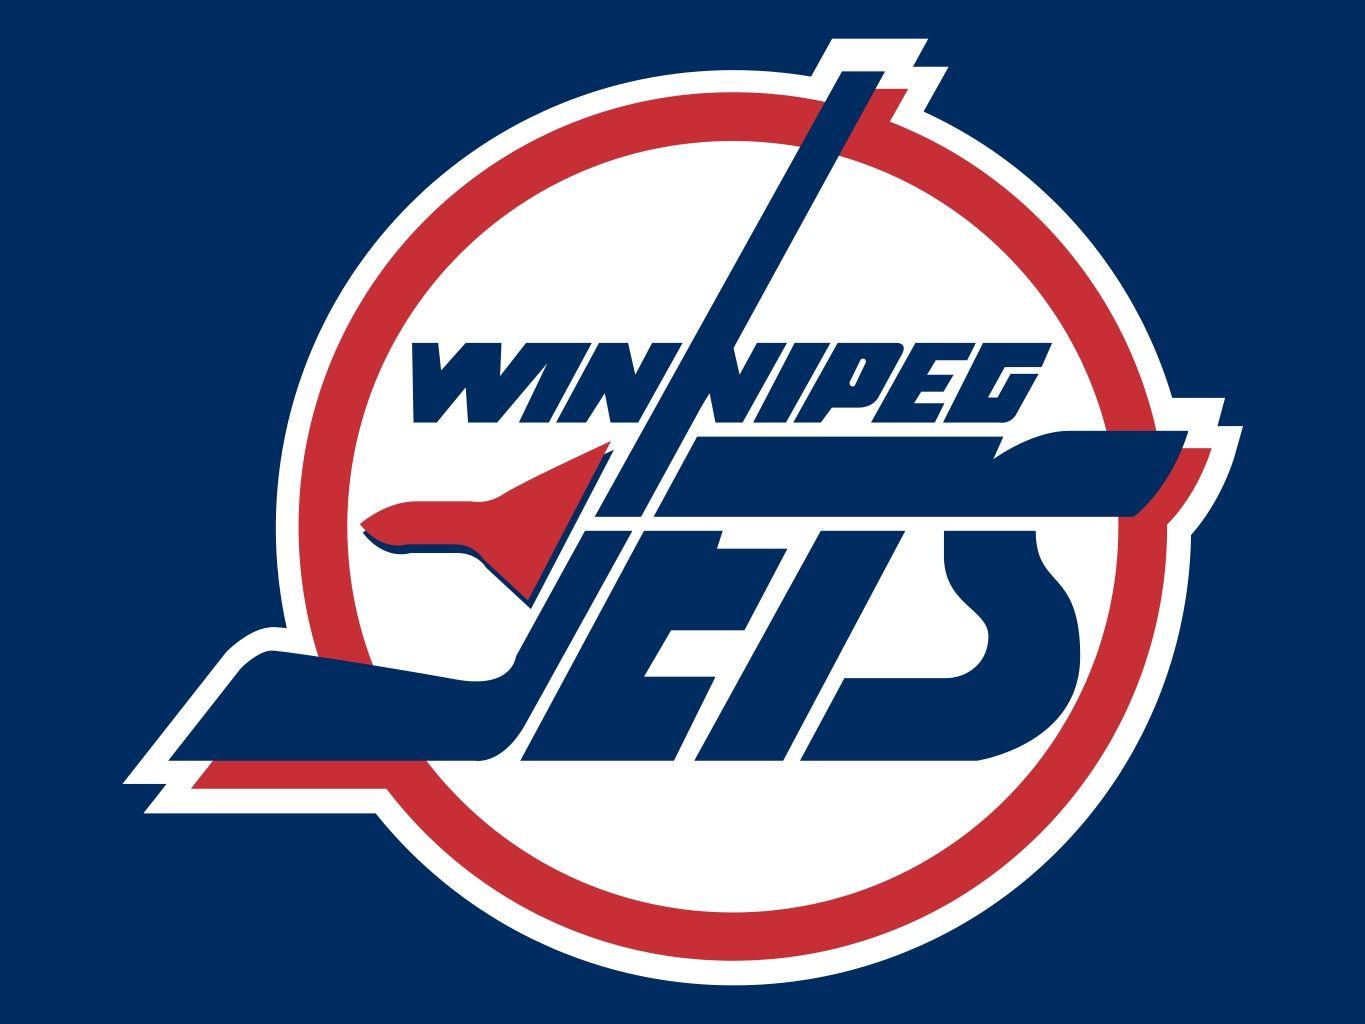 Winnipeg Jets Old Logo - Image - Winnipeg Jets (original).jpg | Pro Sports Teams Wiki ...